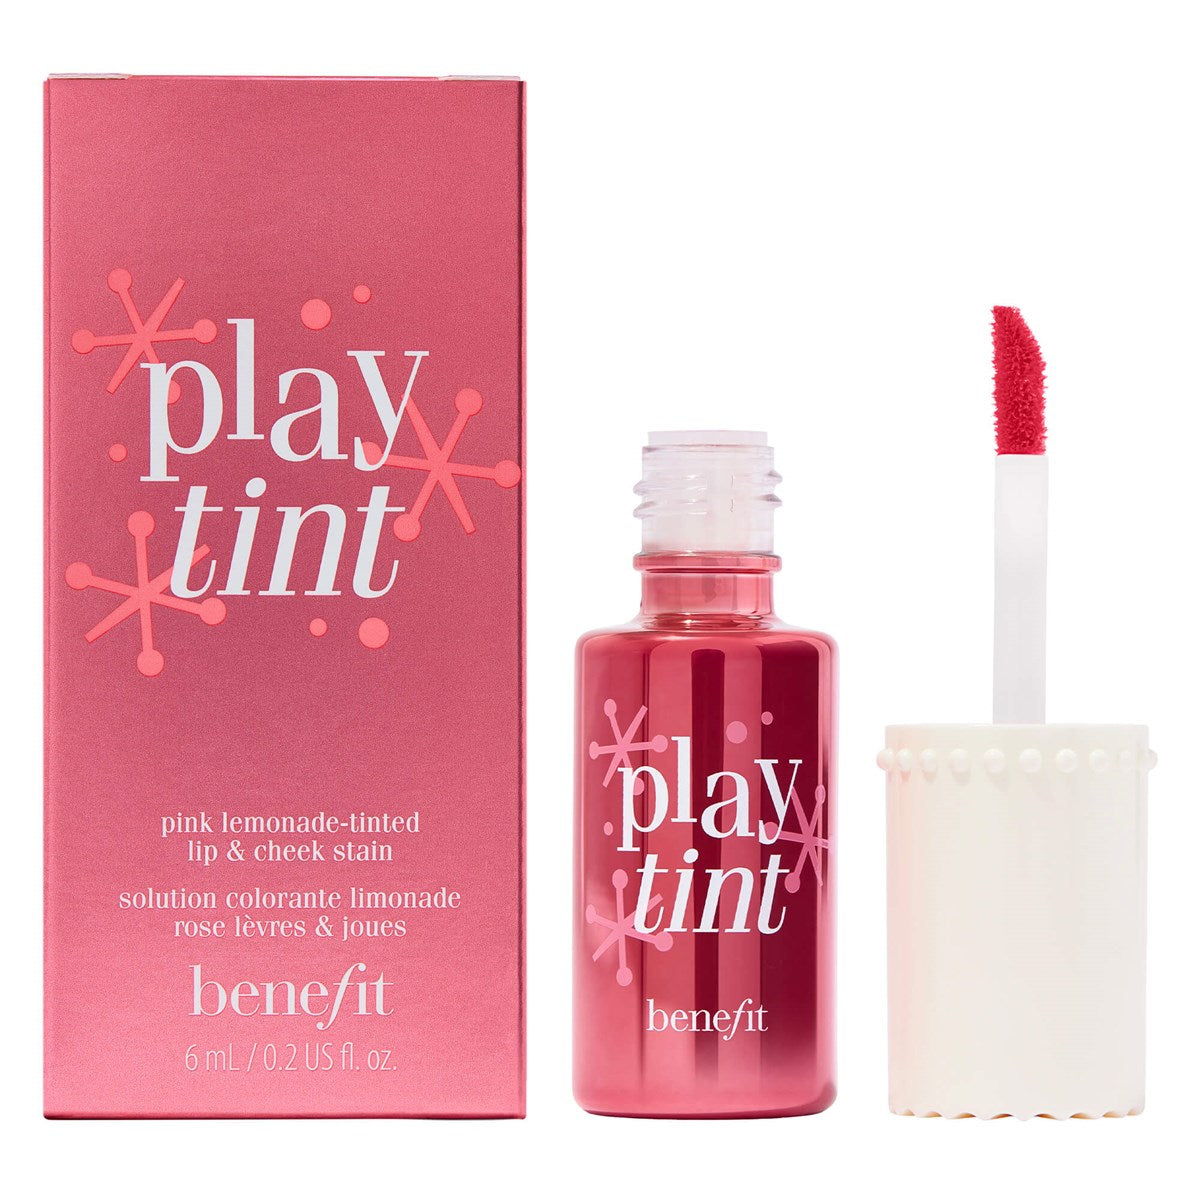 BENEFIT - Play tint Cheek & Lip Stain